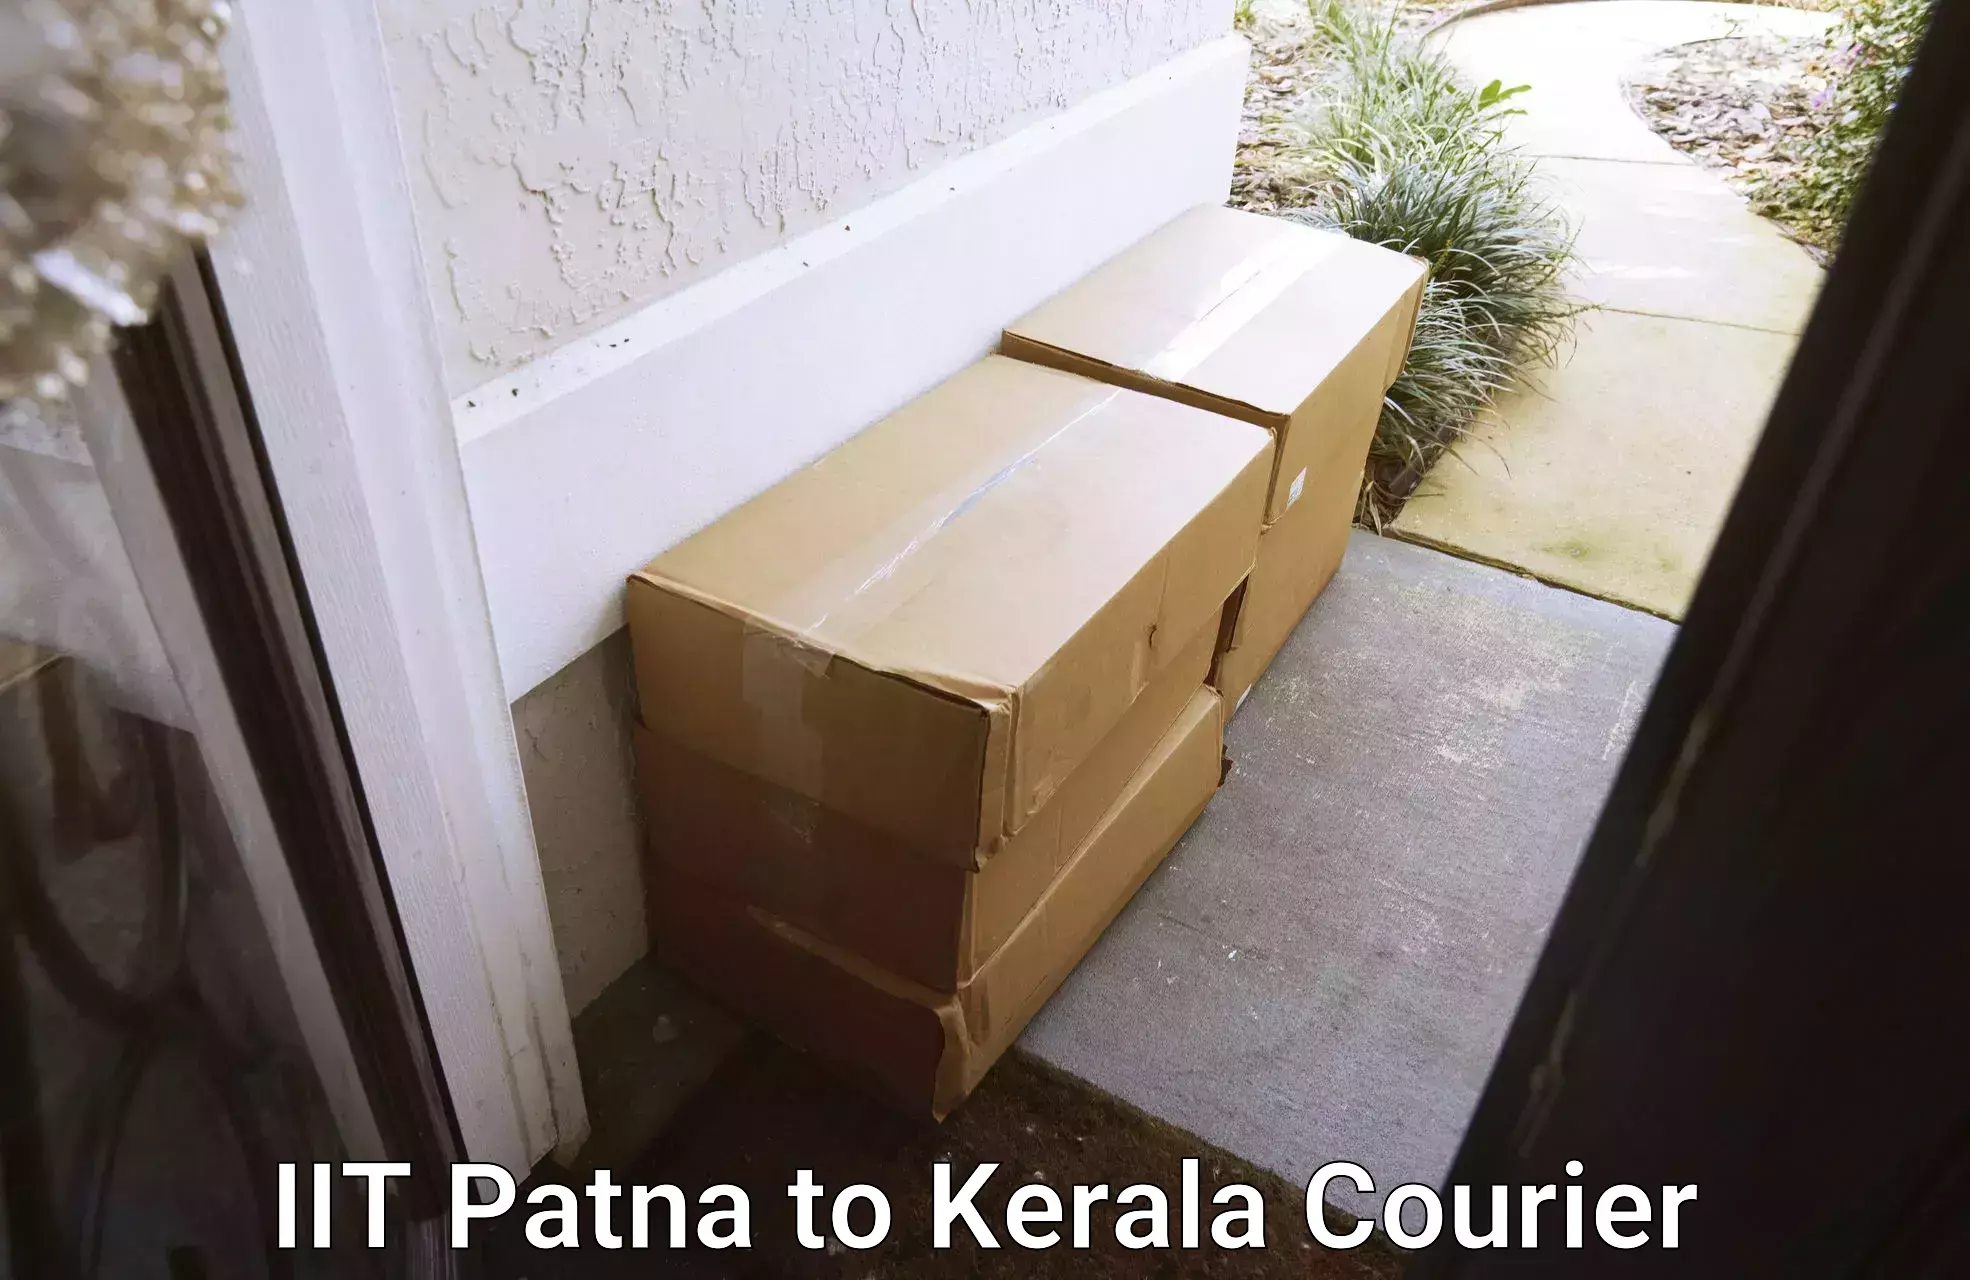 Professional moving company IIT Patna to Kallikkad